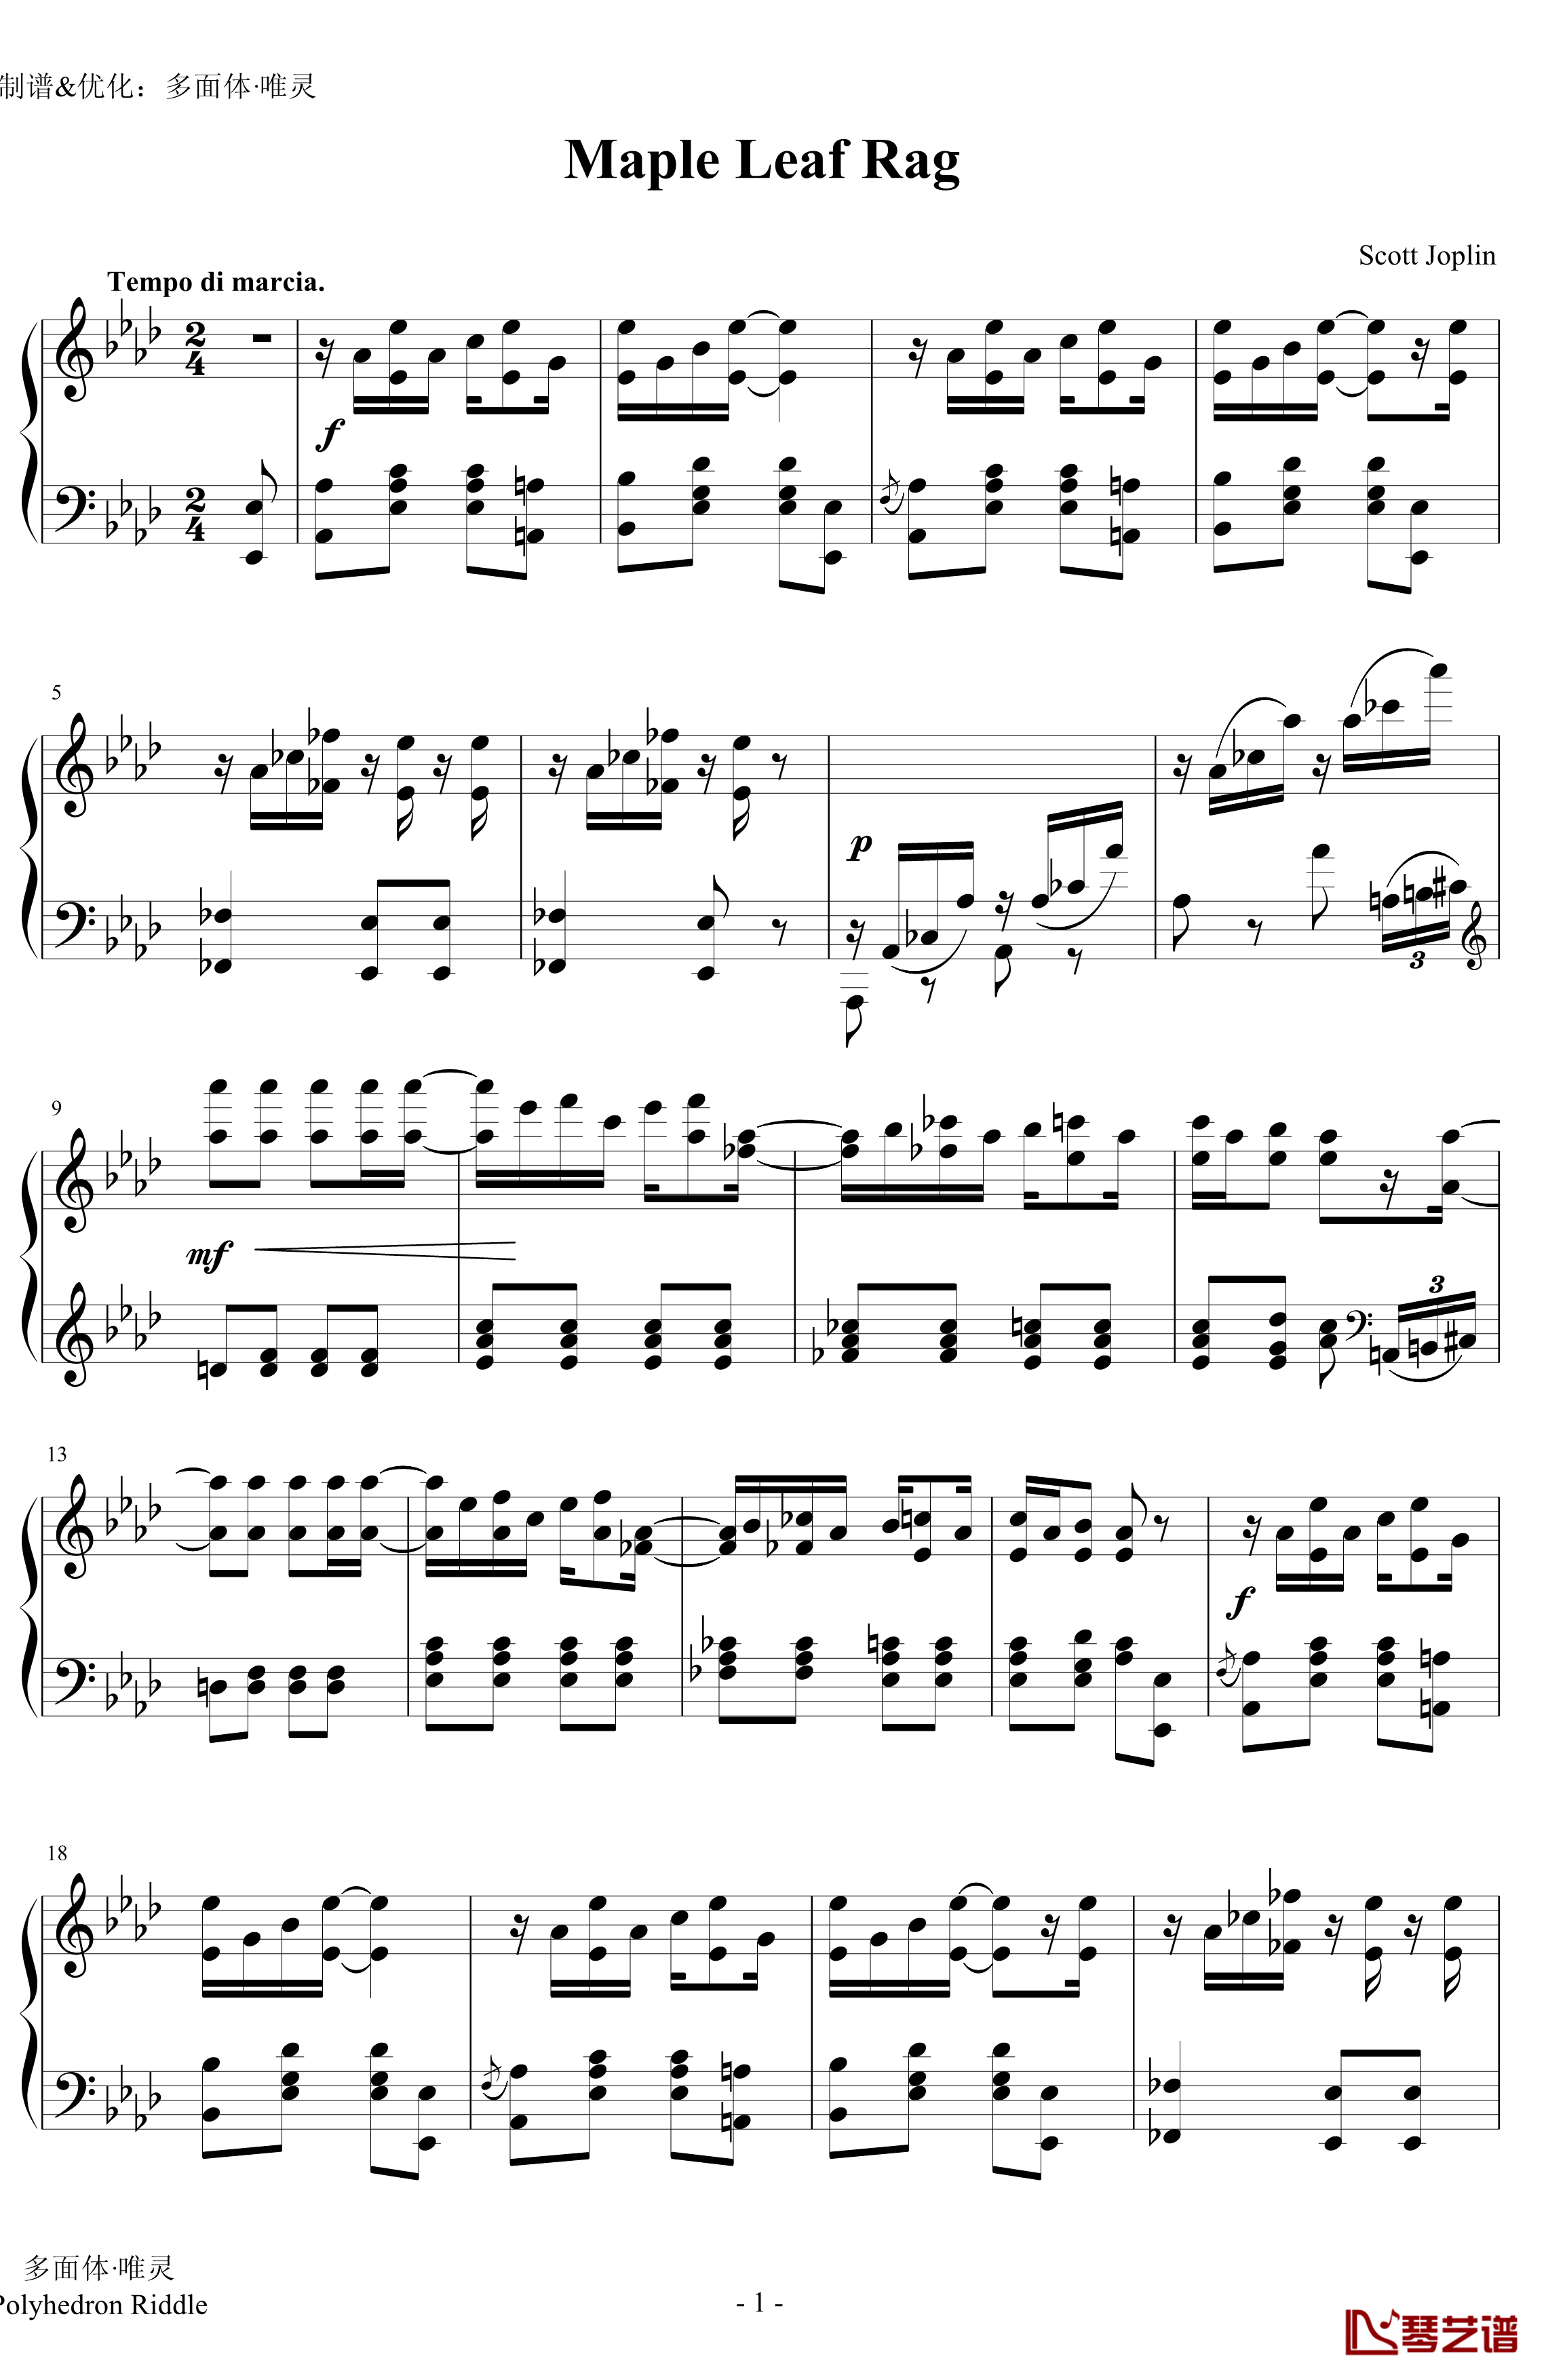 Maple Leaf Rag钢琴谱-拉格泰姆-Scott Joplin1